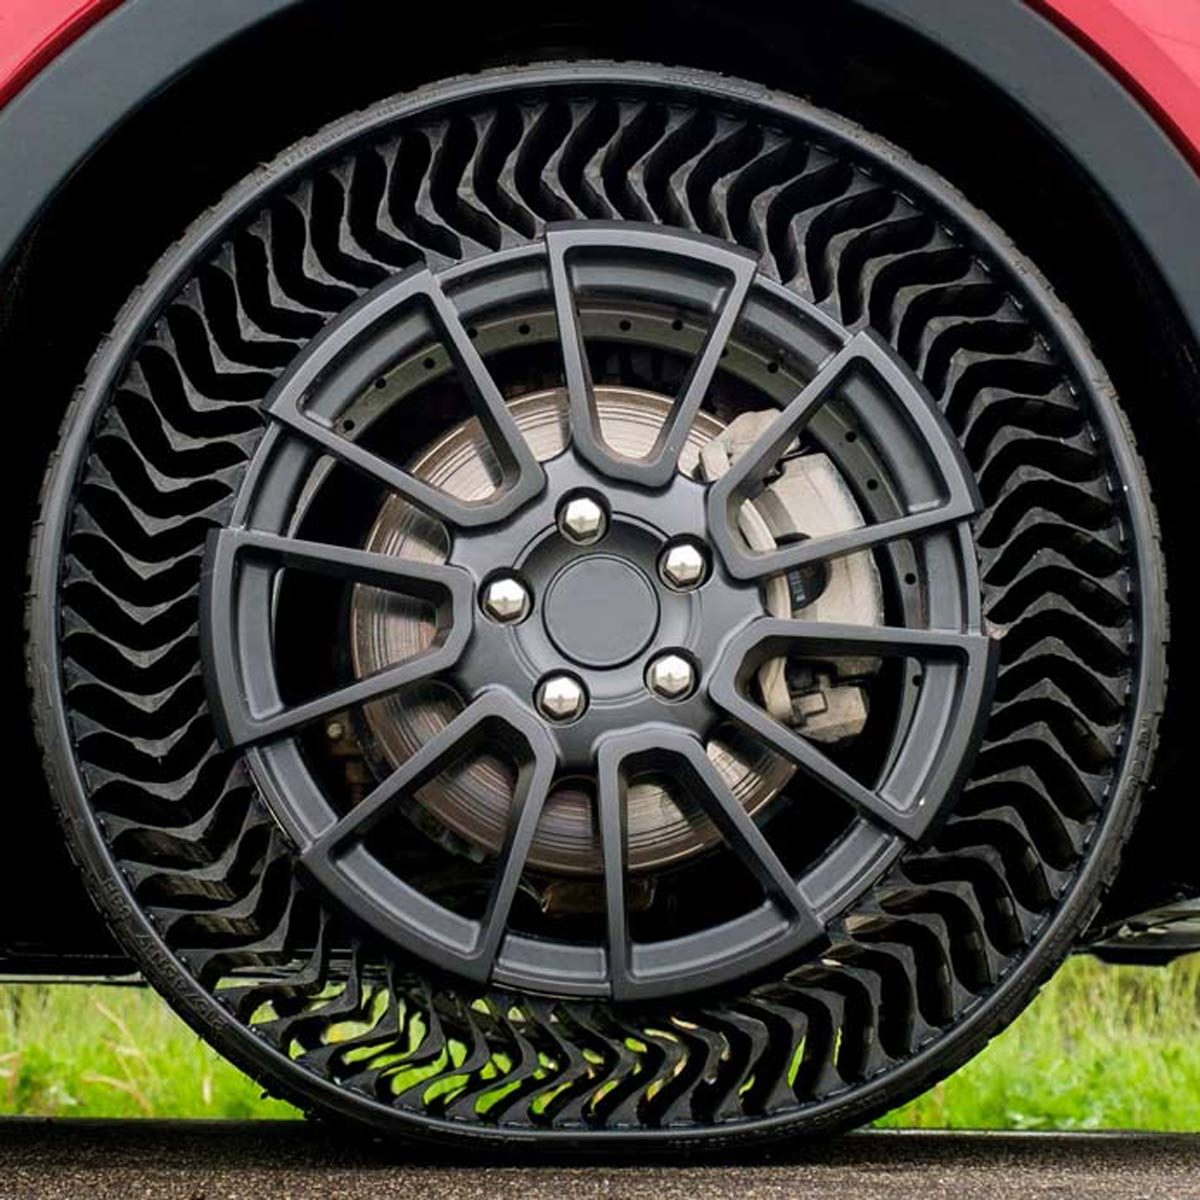 Are Airless Car Tires a Good Idea?